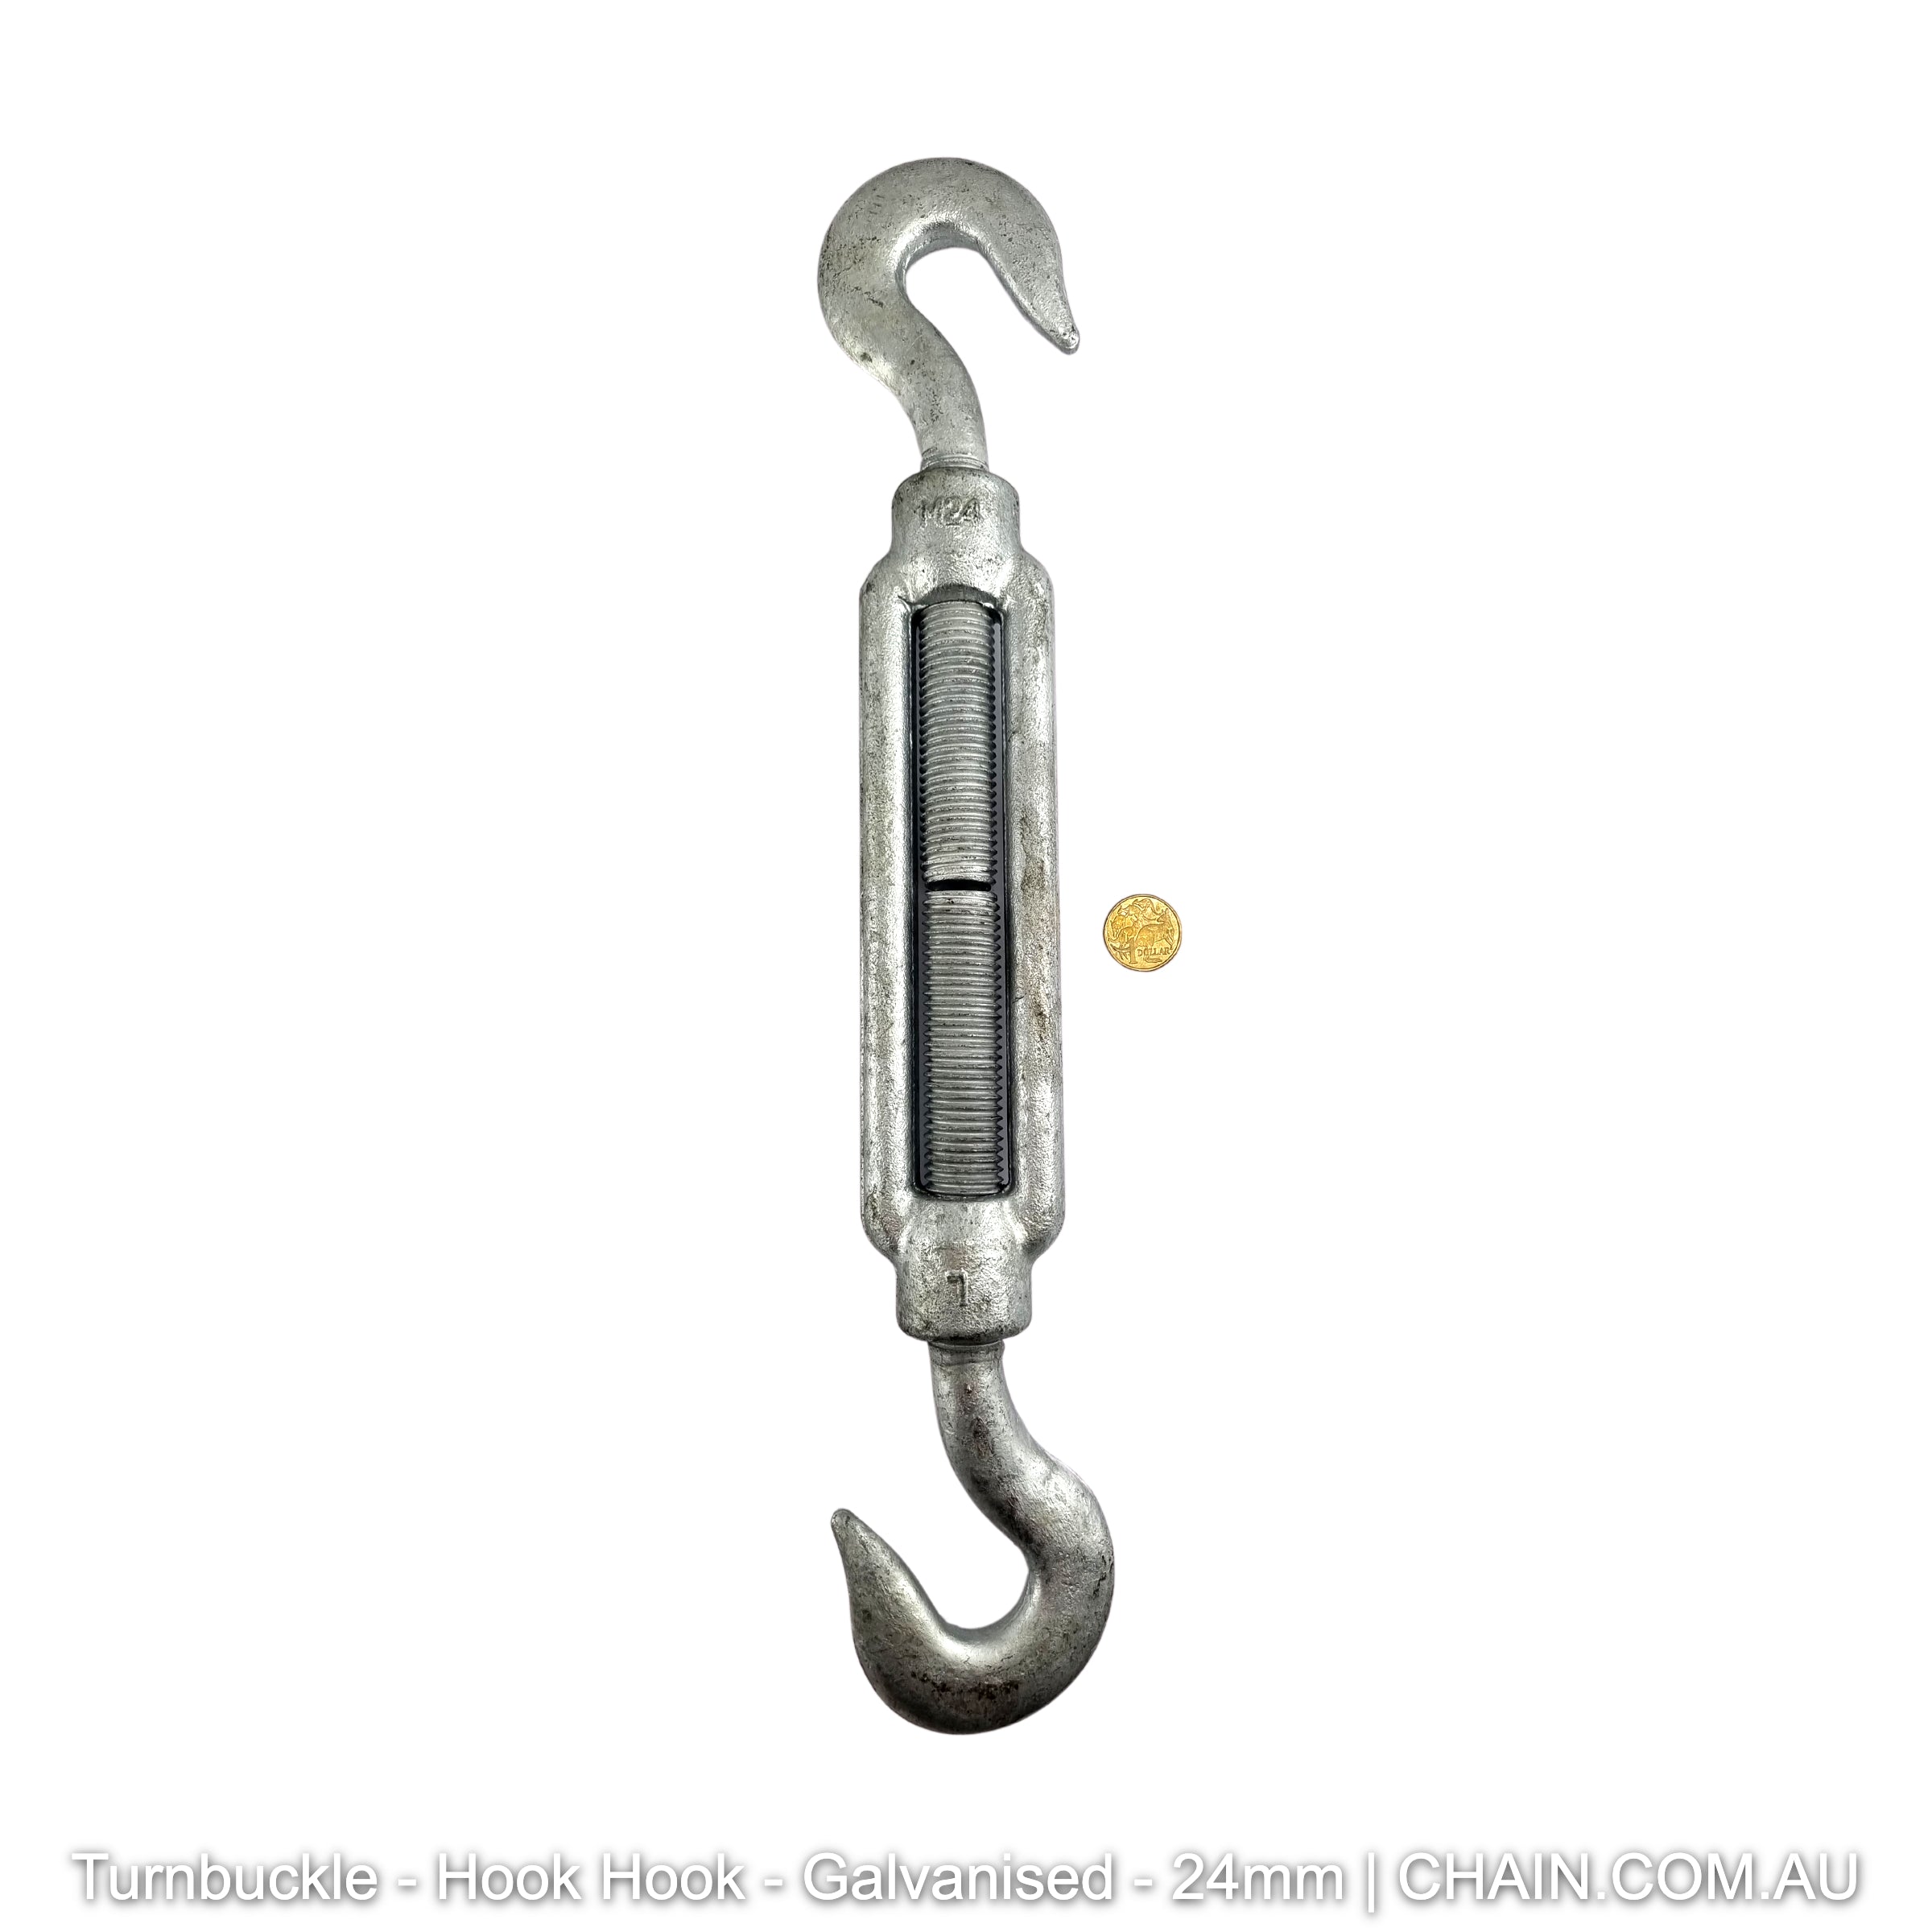 Turnbuckles - Galvanised - Hook-Hook - Size: 24mm. Australia wide shipping